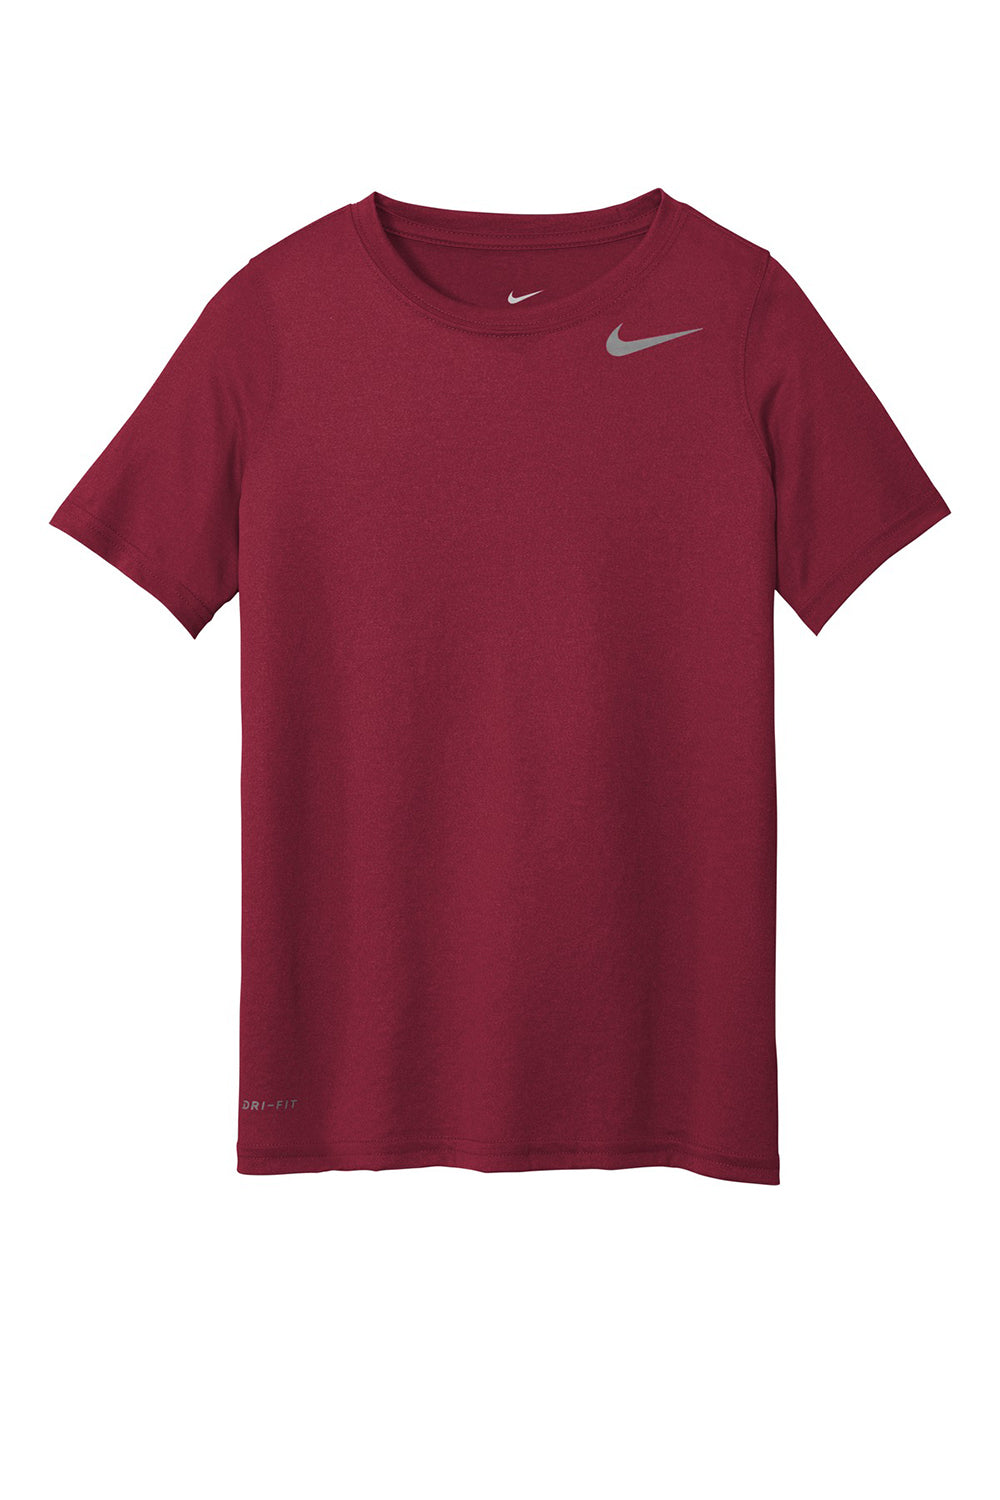 Nike 840178 Youth Legend Dri-Fit Moisture Wicking Short Sleeve Crewneck T-Shirt Team Maroon Flat Front